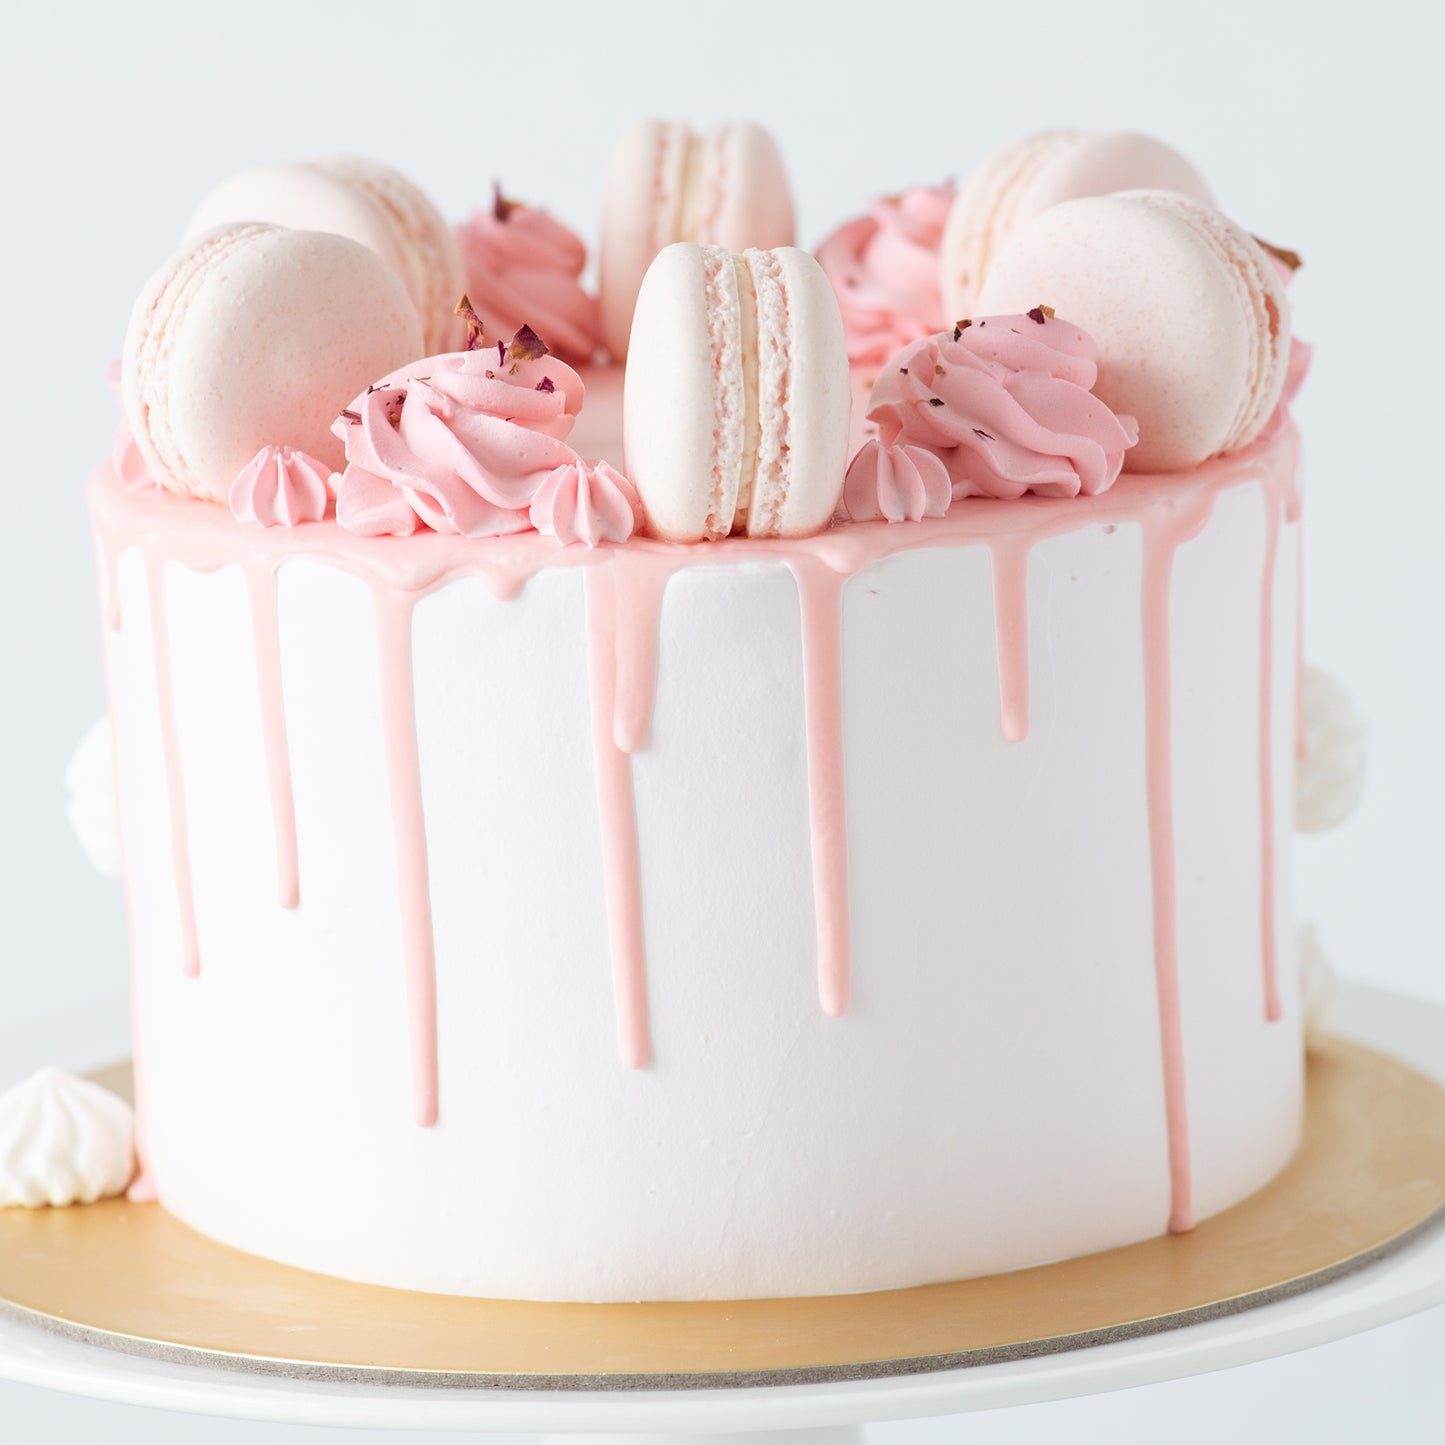 Sales! Lychee Rose Cake Upsize (Including  6 pcs macarons)| $65.80 nett only